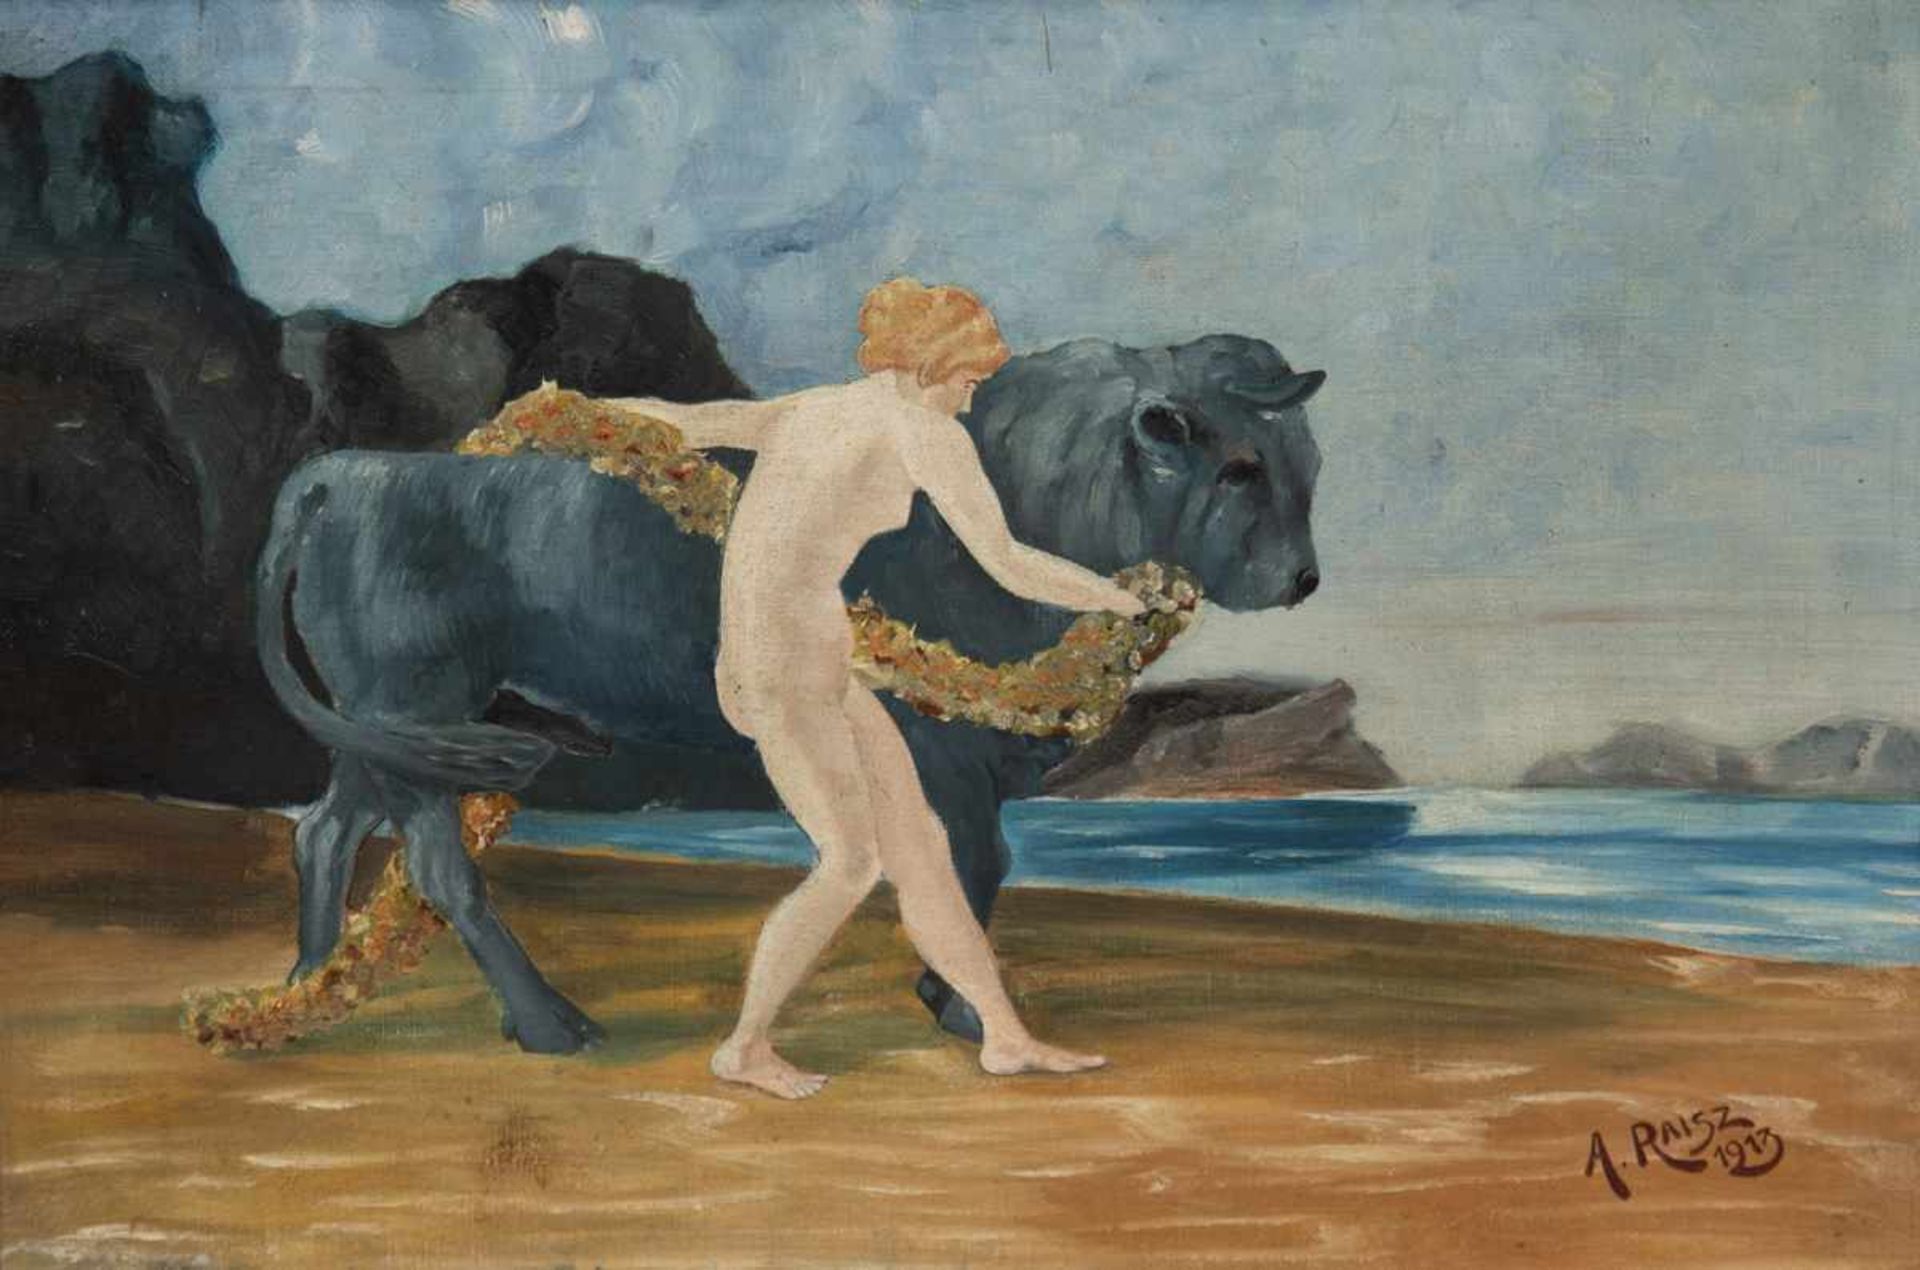 Raisz, A. "Europa mit dem Stier", Öl/Lw., sign. u.r. und dat. 1913, 32x46 cm, Rahmen